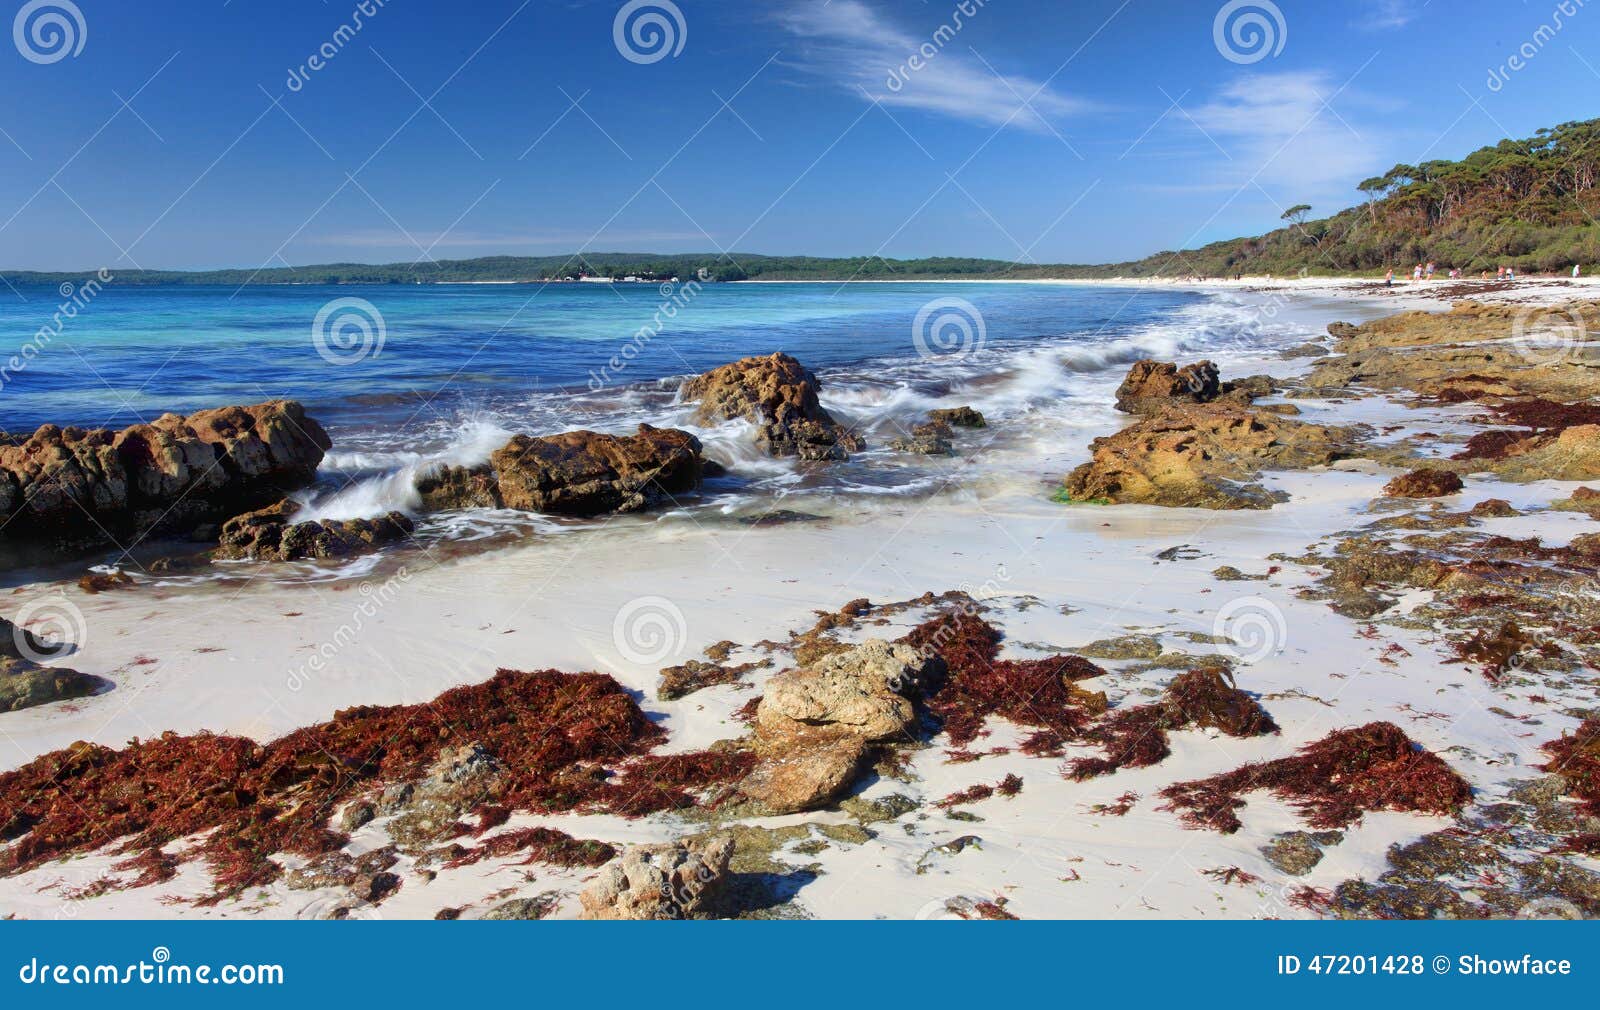 hyams beach, jervis bay australia